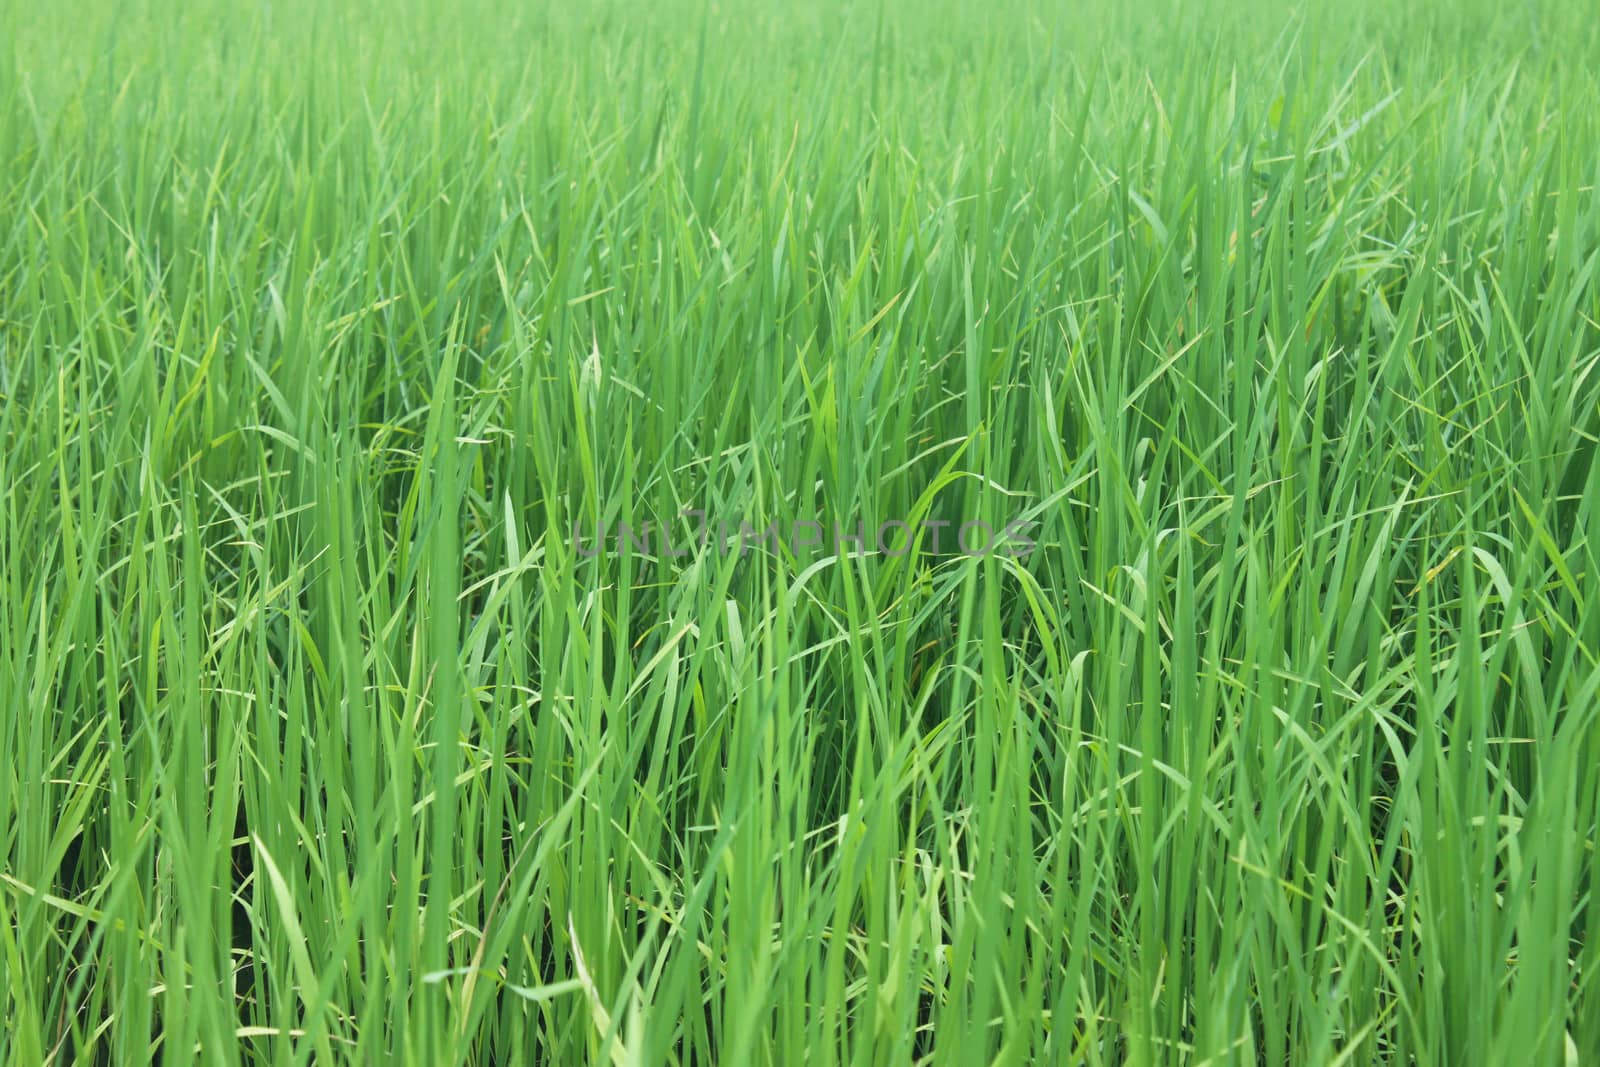 Rice background